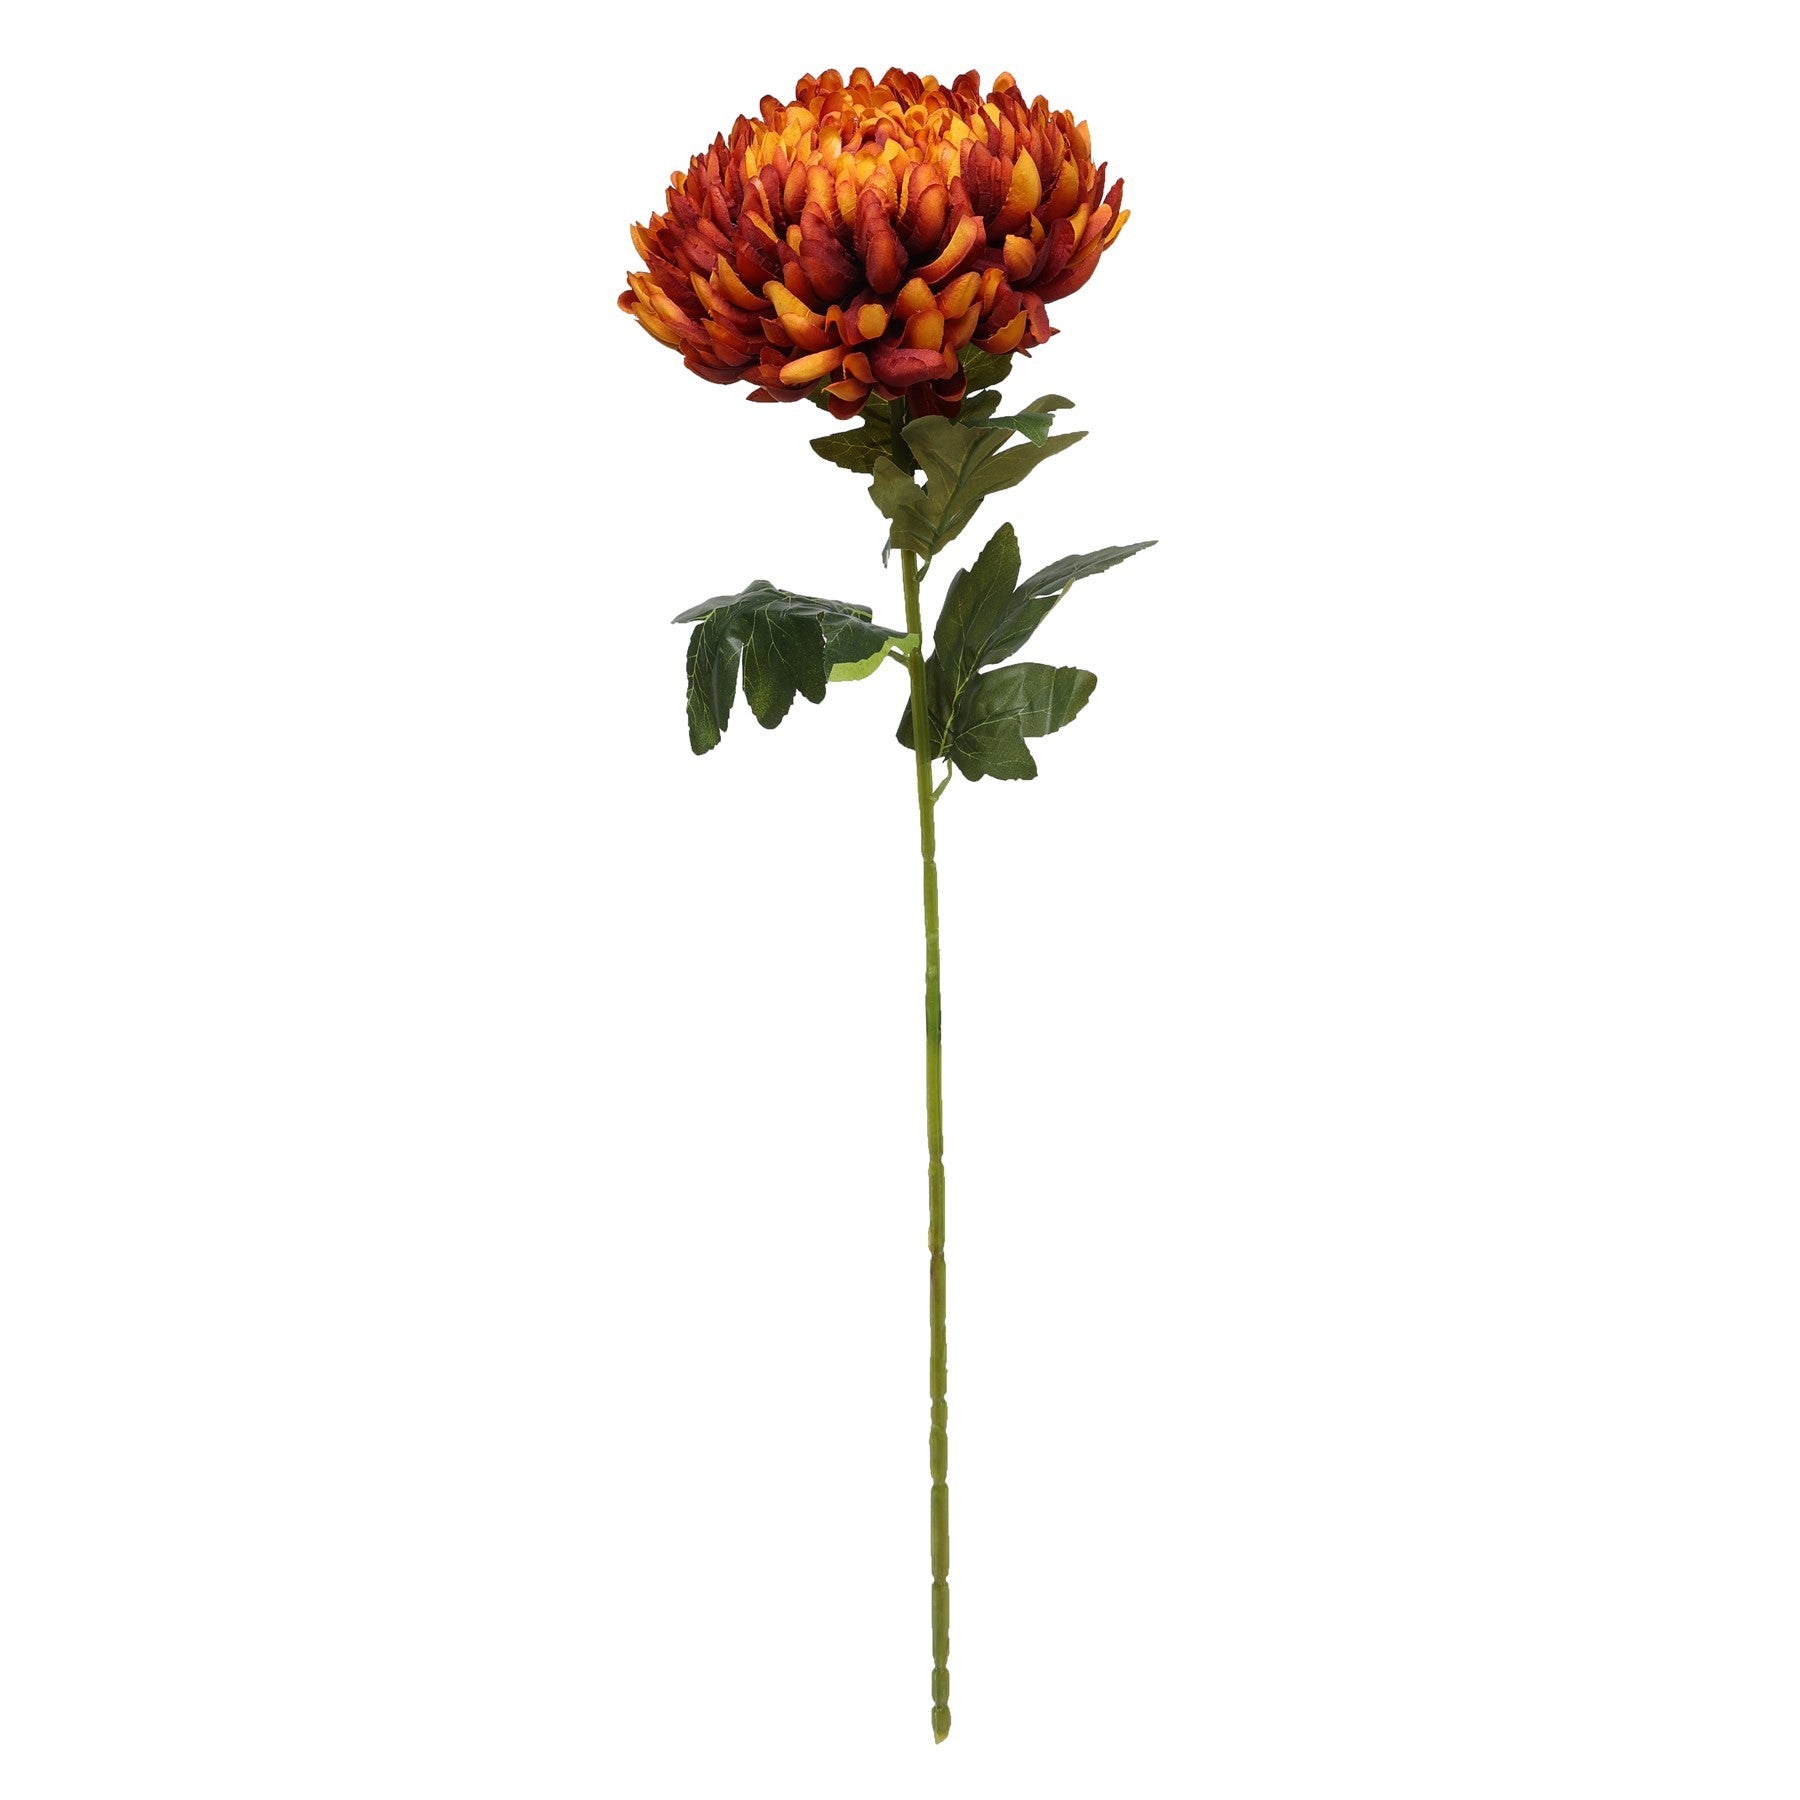 View Chrysanthemum Dark Orange information